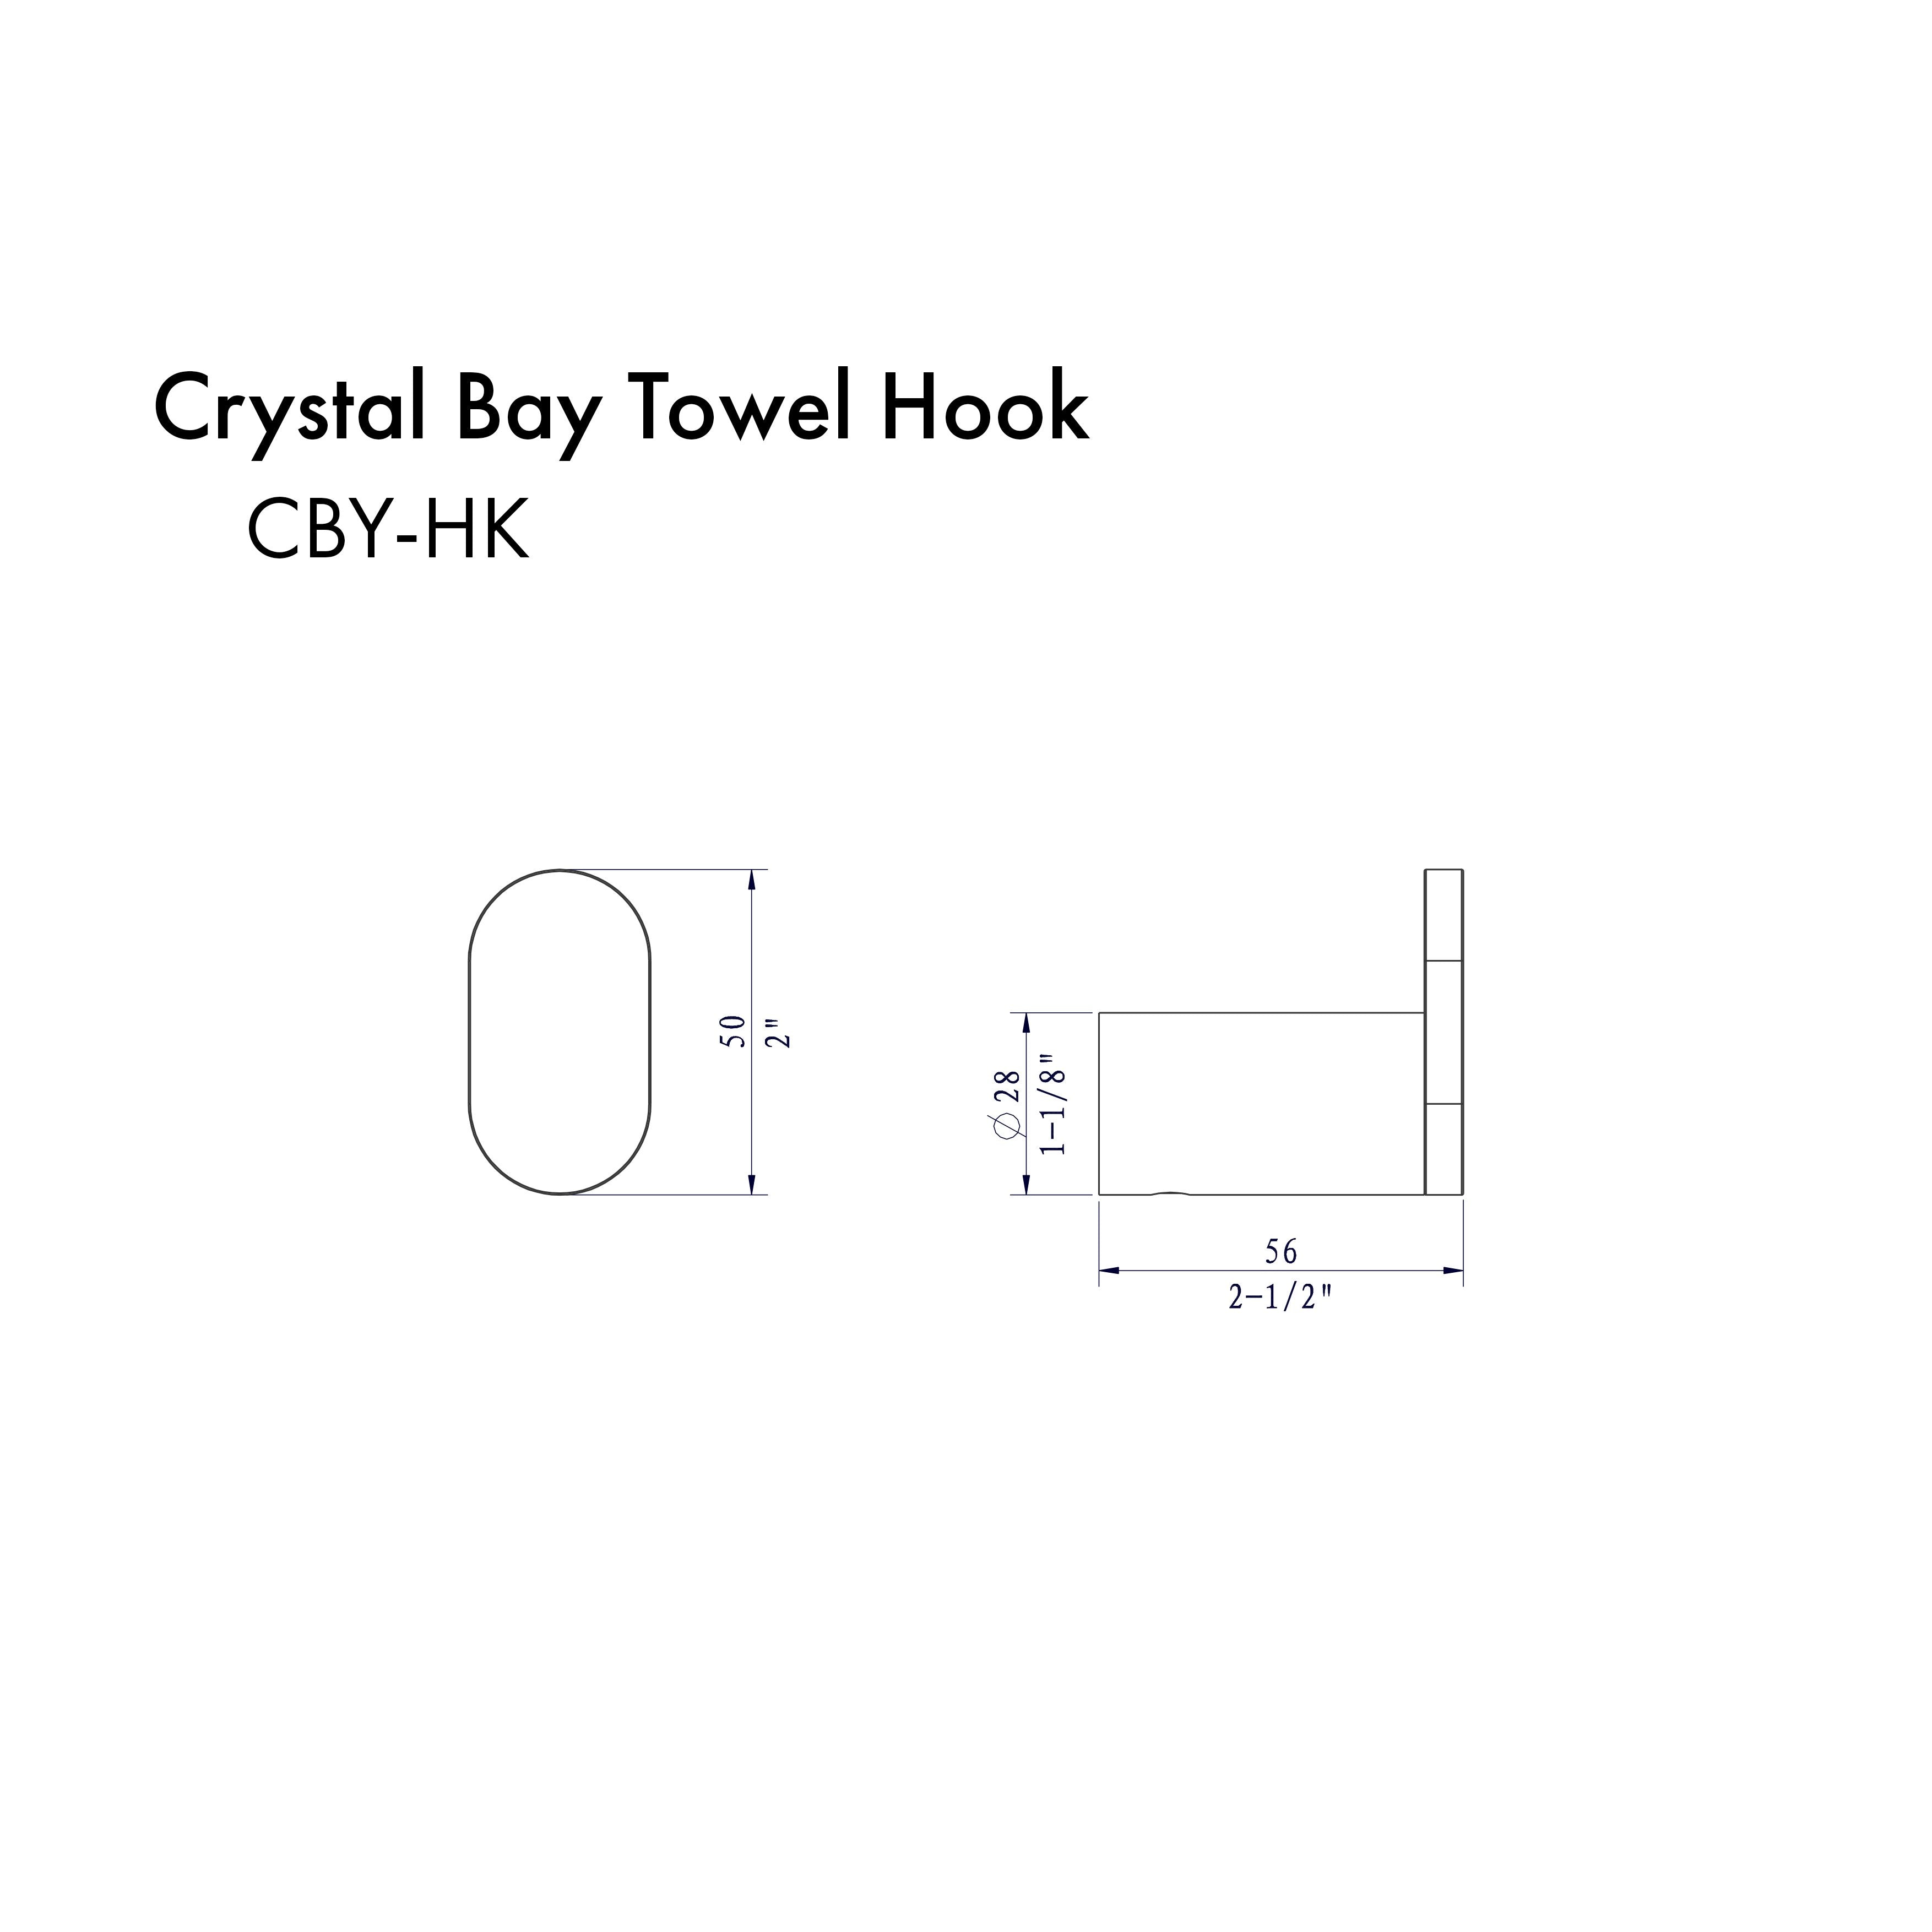 Therangehoodstore.com, ZLINE Crystal Bay Towel Hook With Color Options, CBY-HK-BN,